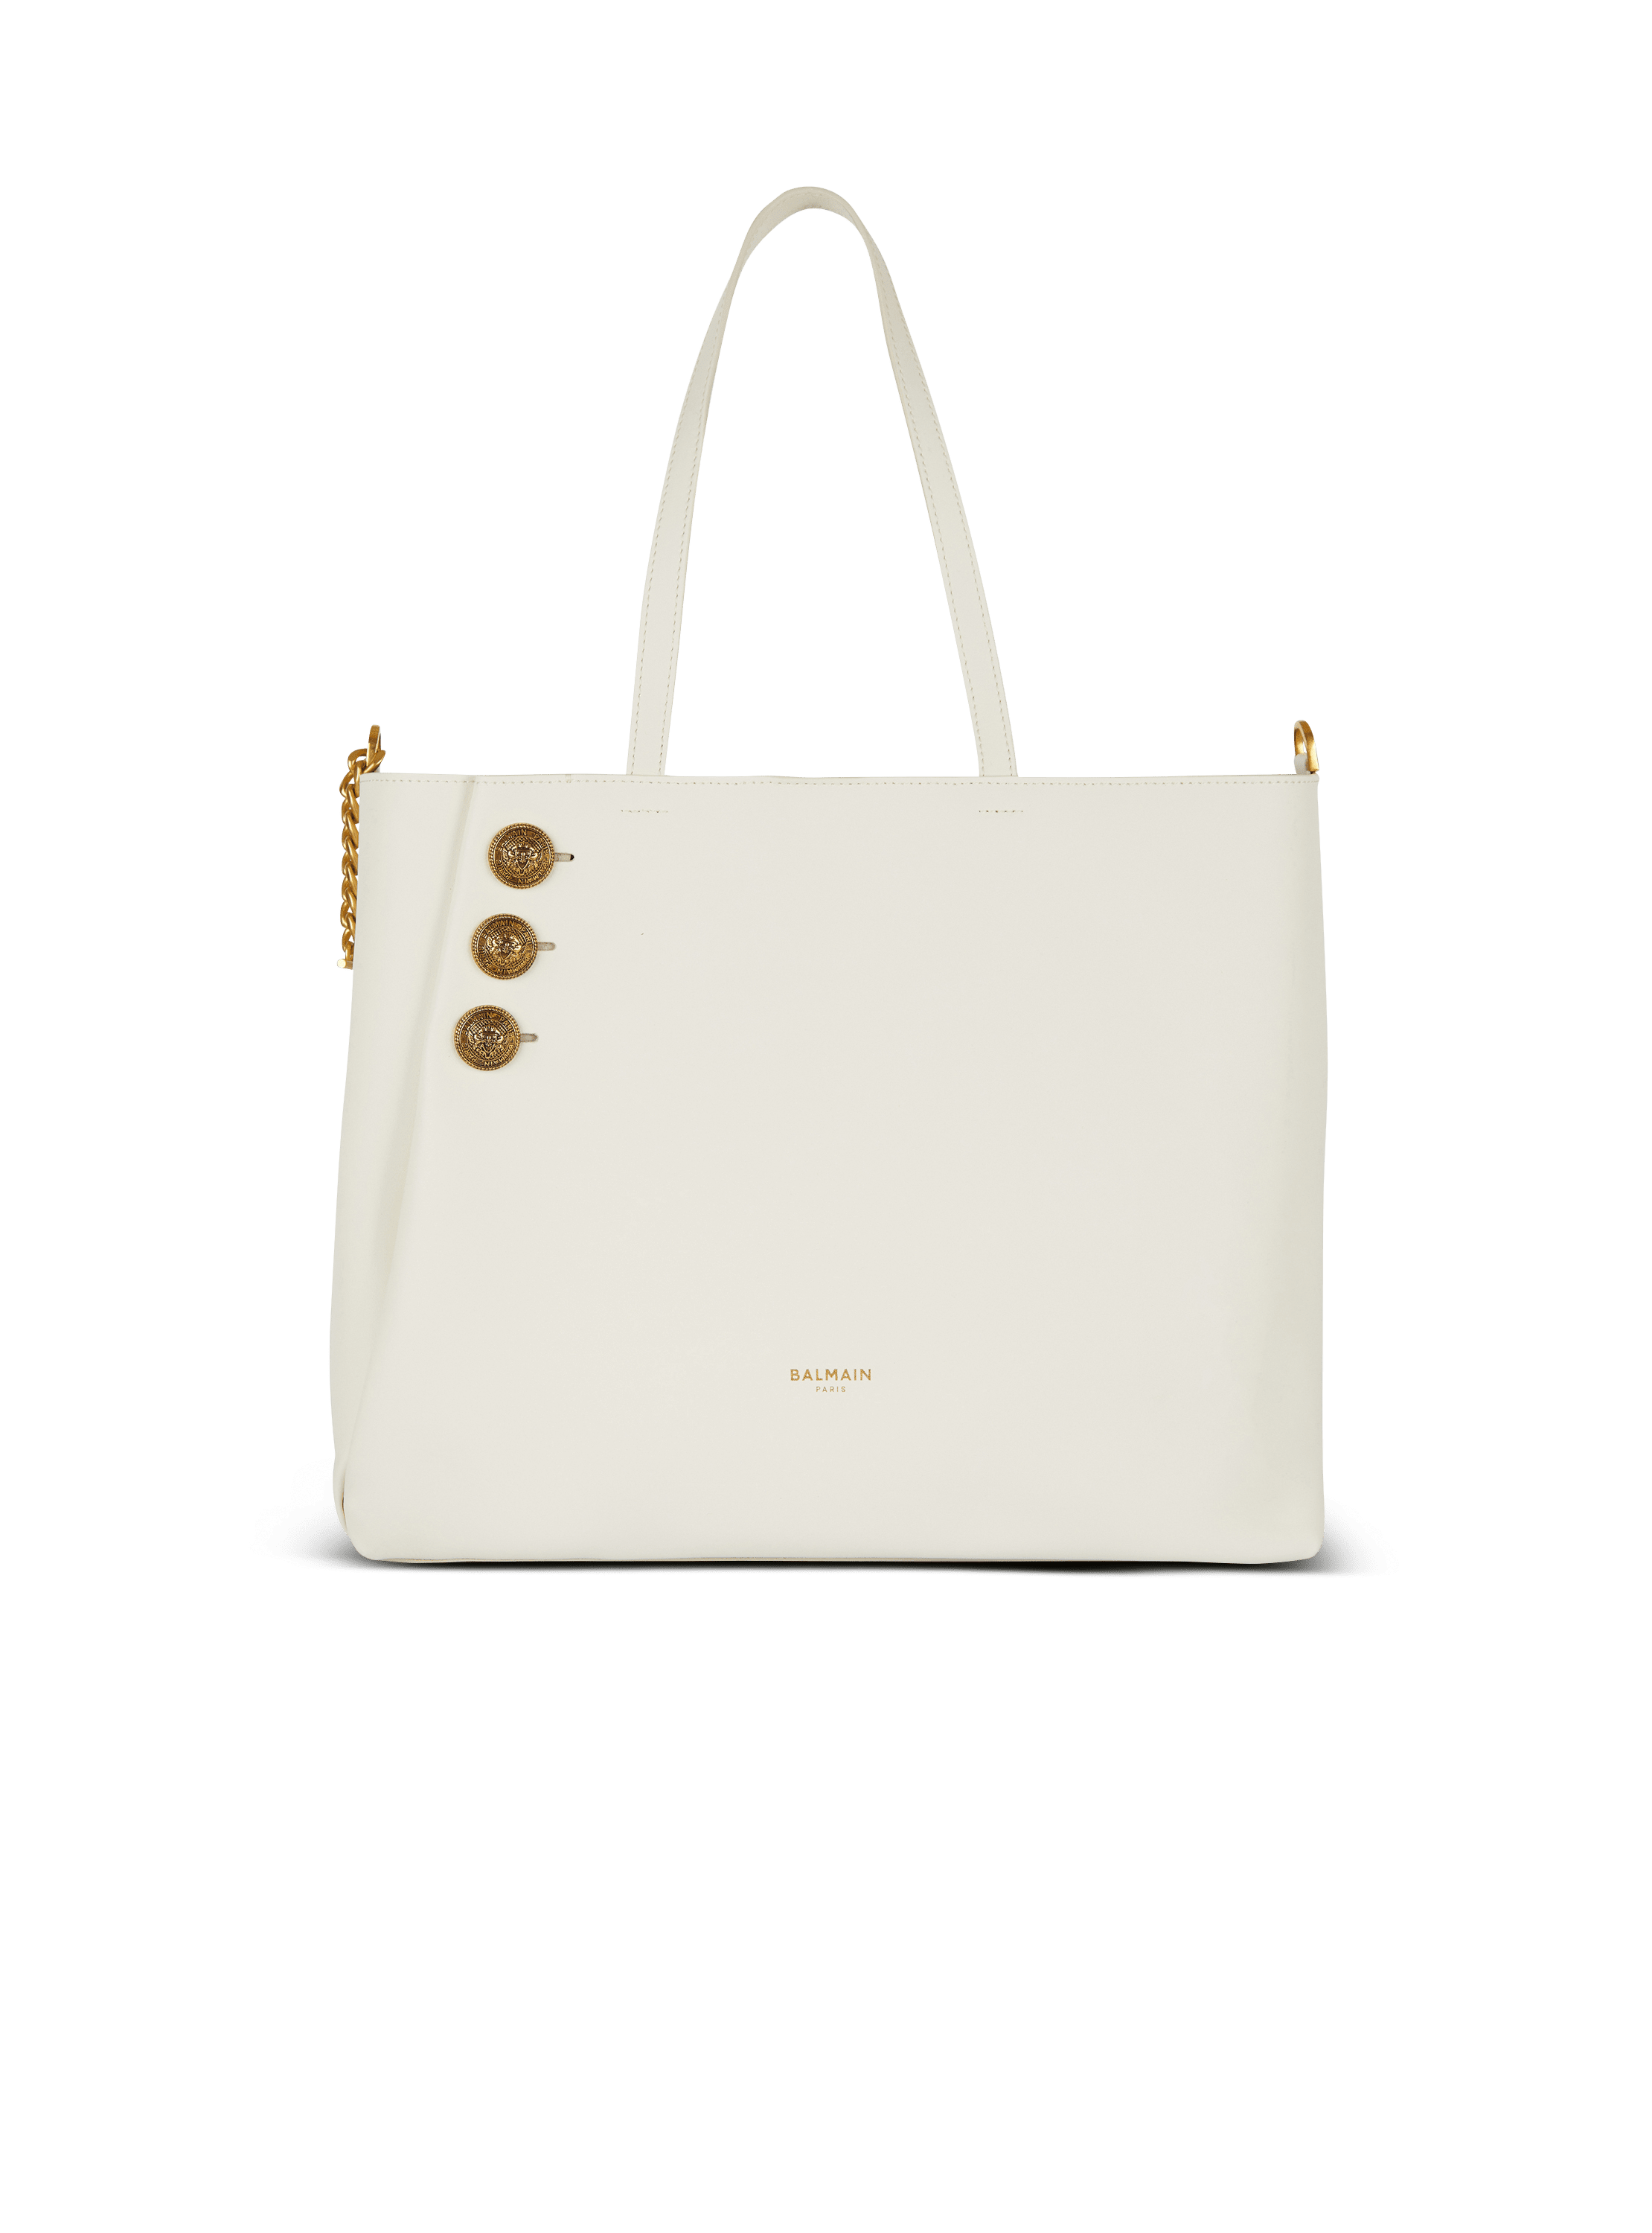 Emblème皮革购物包, white, hi-res